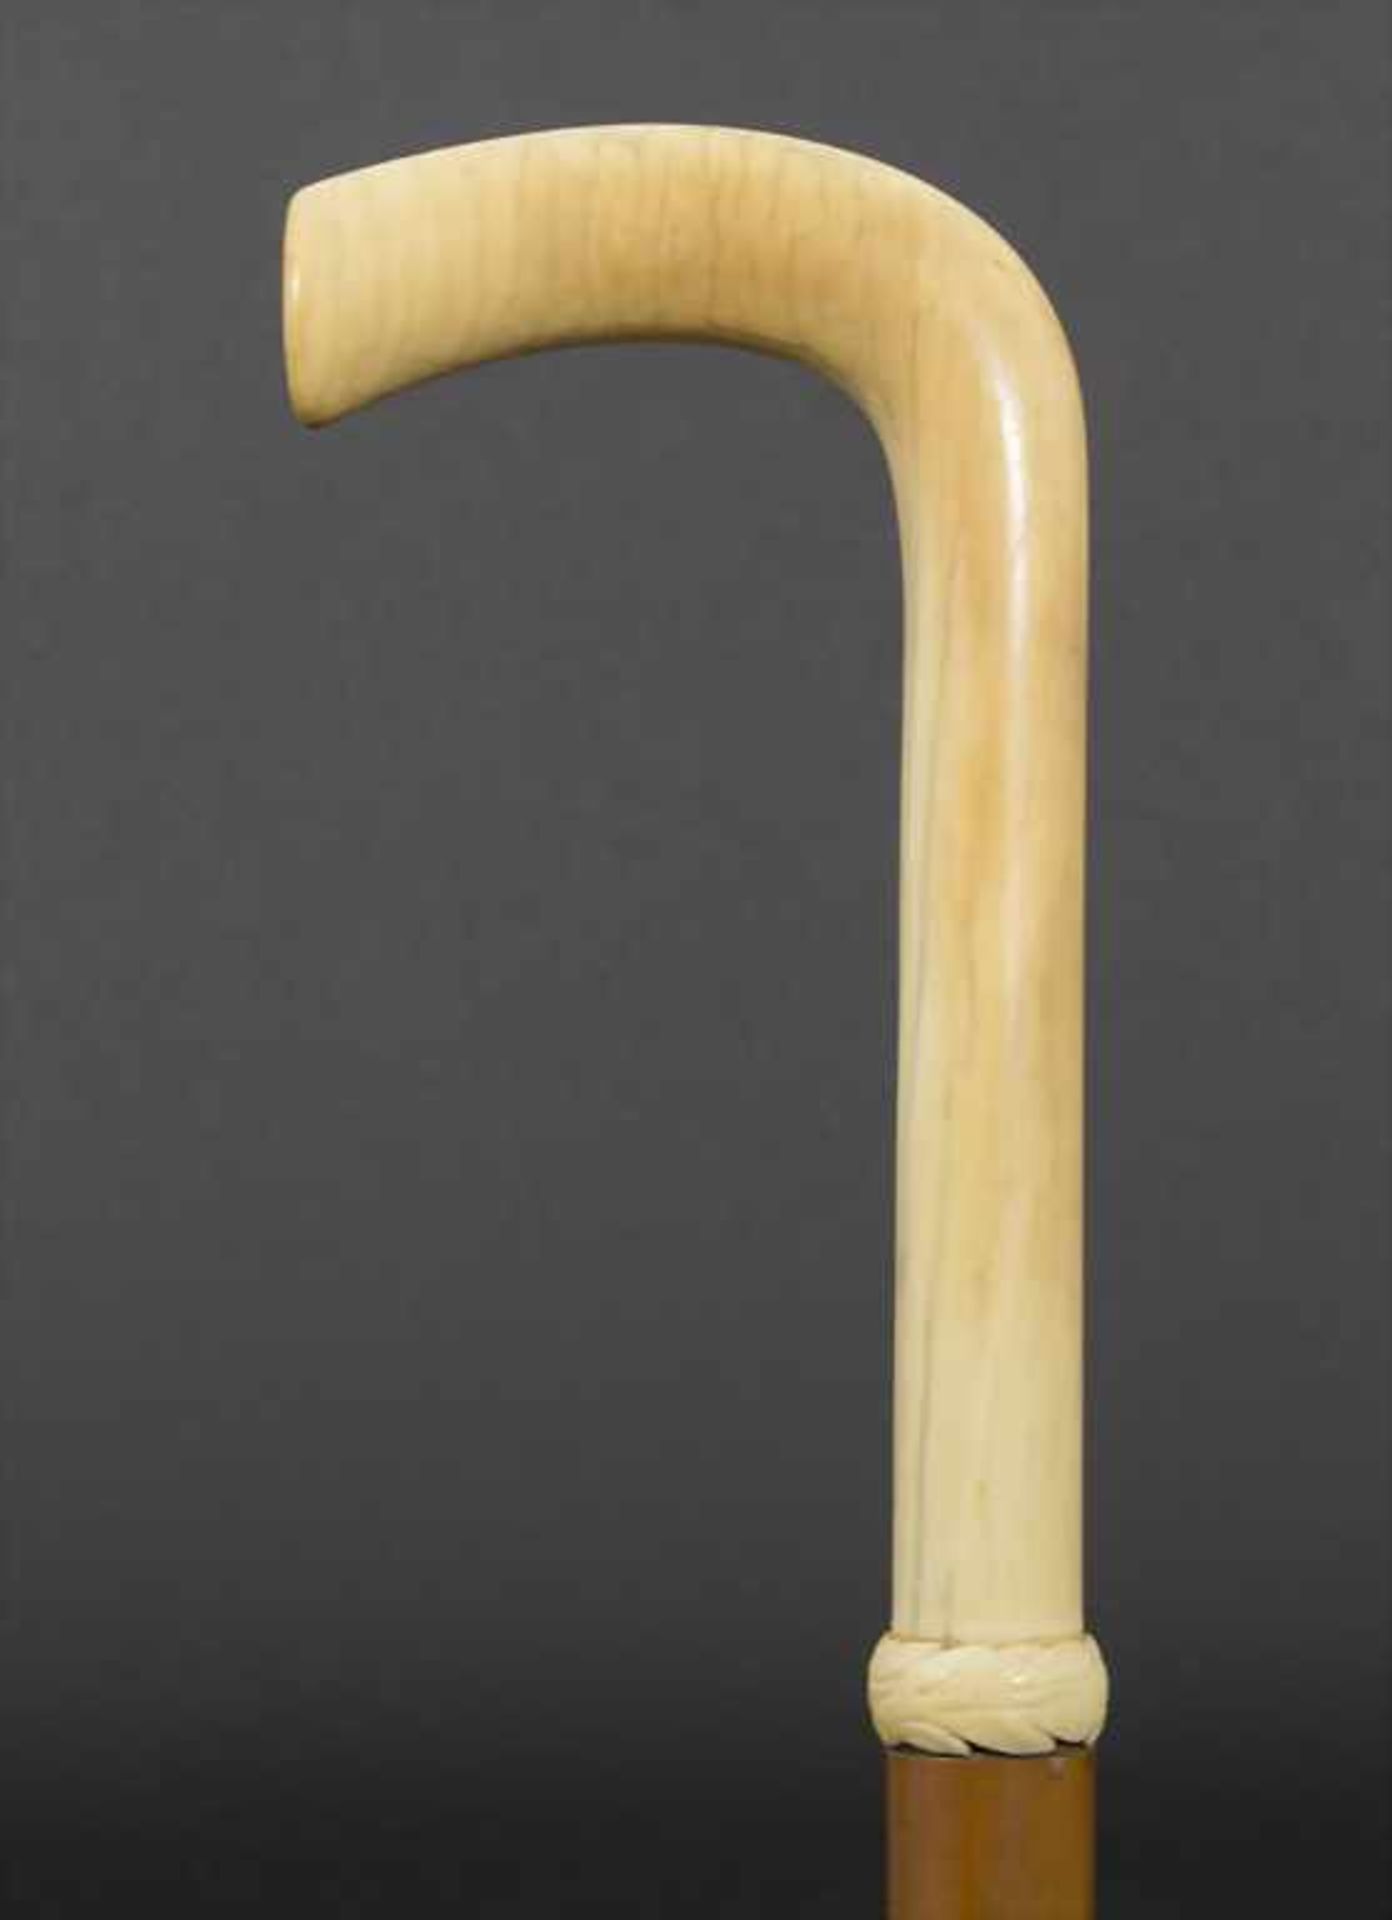 Gehstock mit Elfenbeingriff / A cane with ivory handle, um 1880Material: Malaccarohr (Schuss),